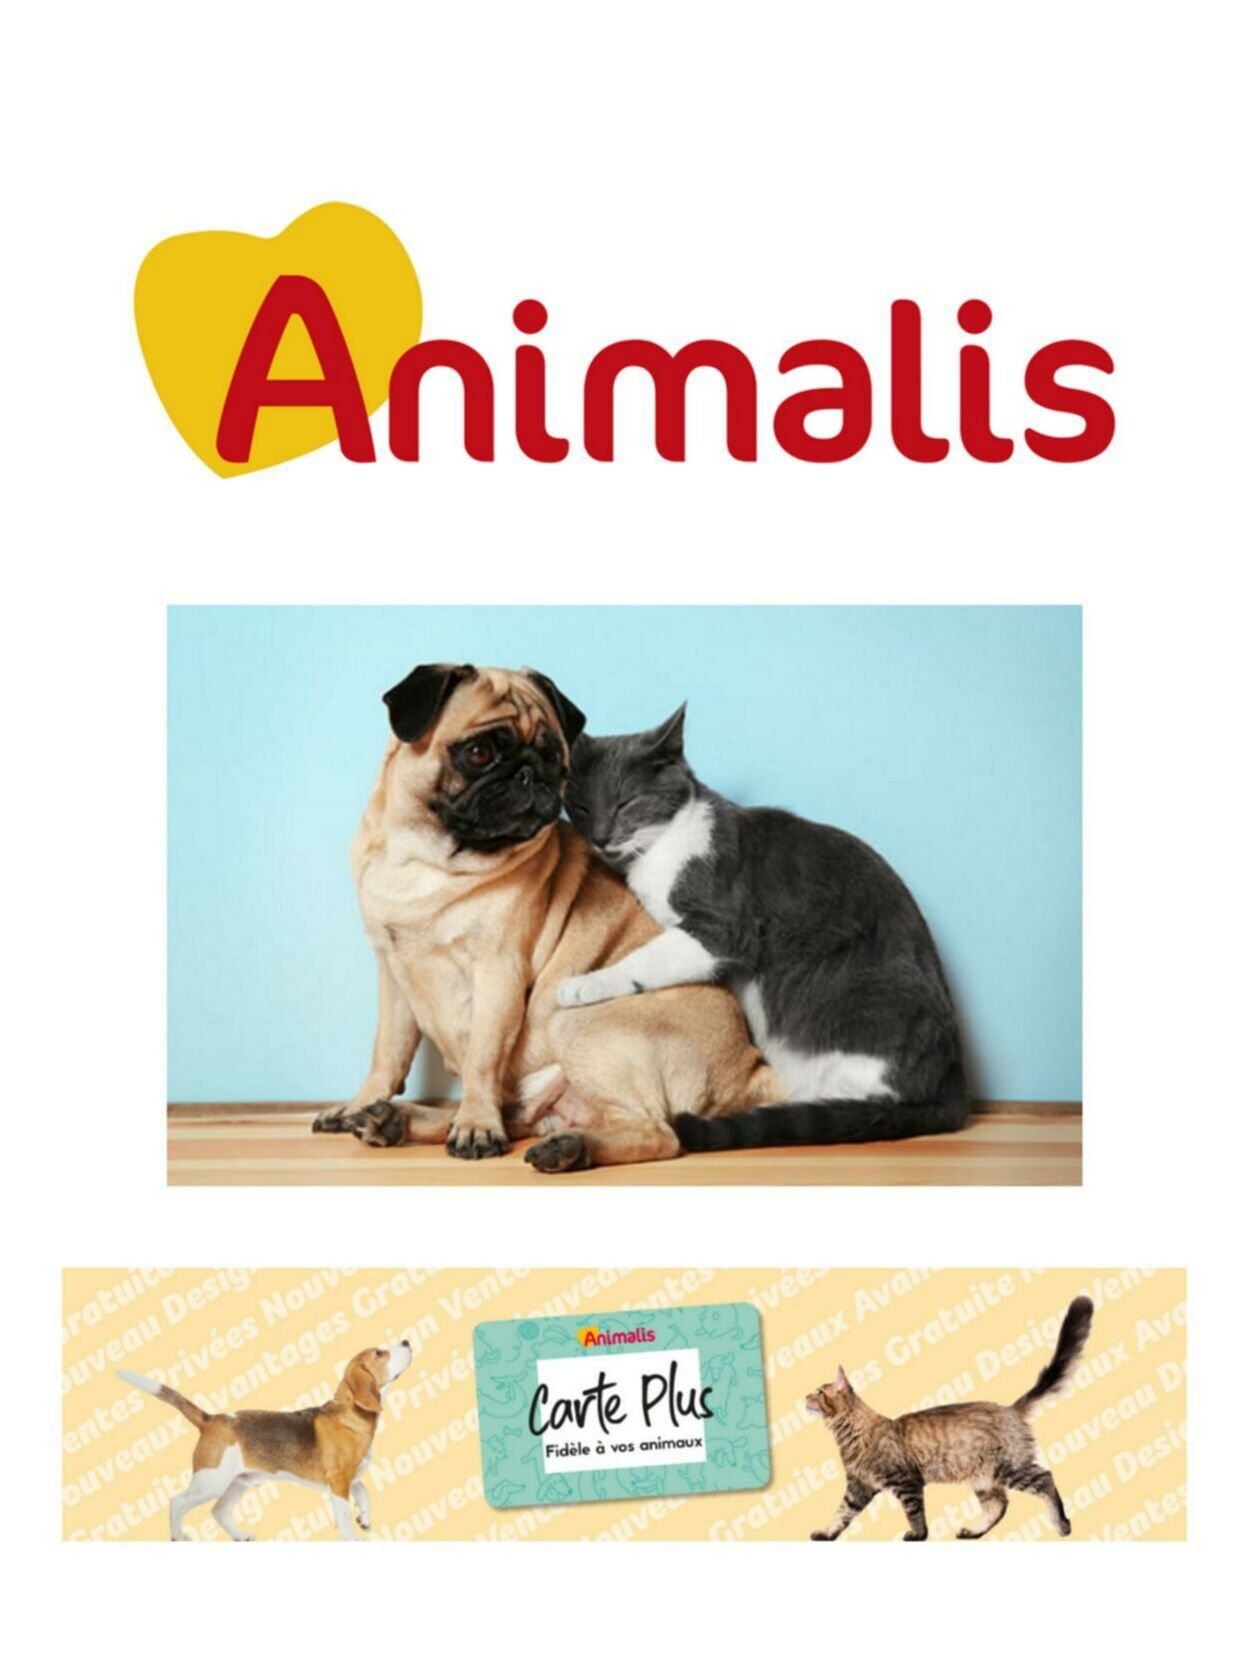 Animalis Catalogues promotionnels